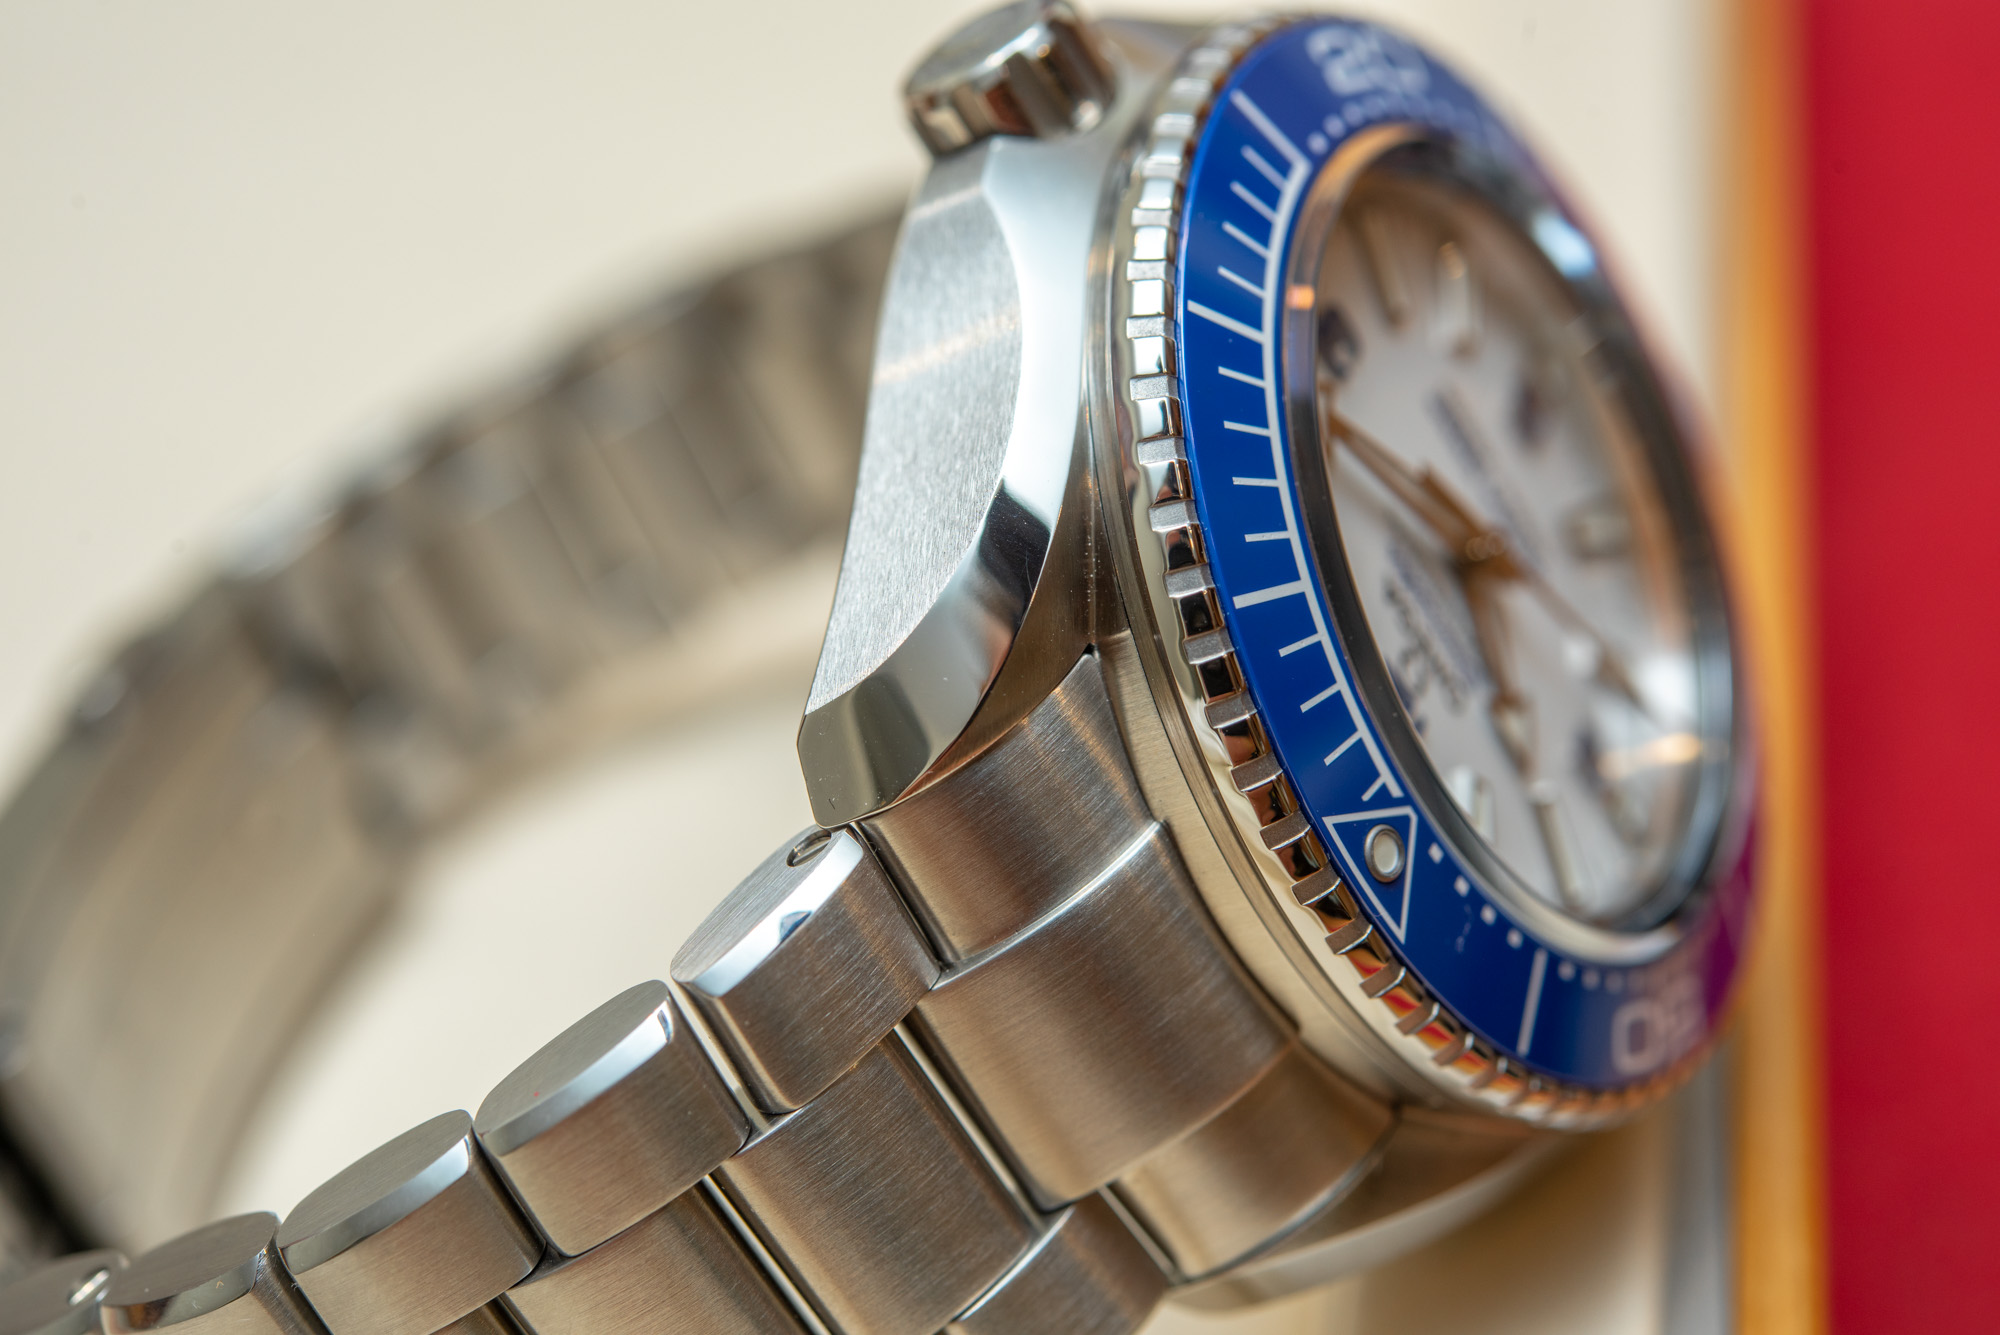 Metal Bracelet Watches, Watch Materials